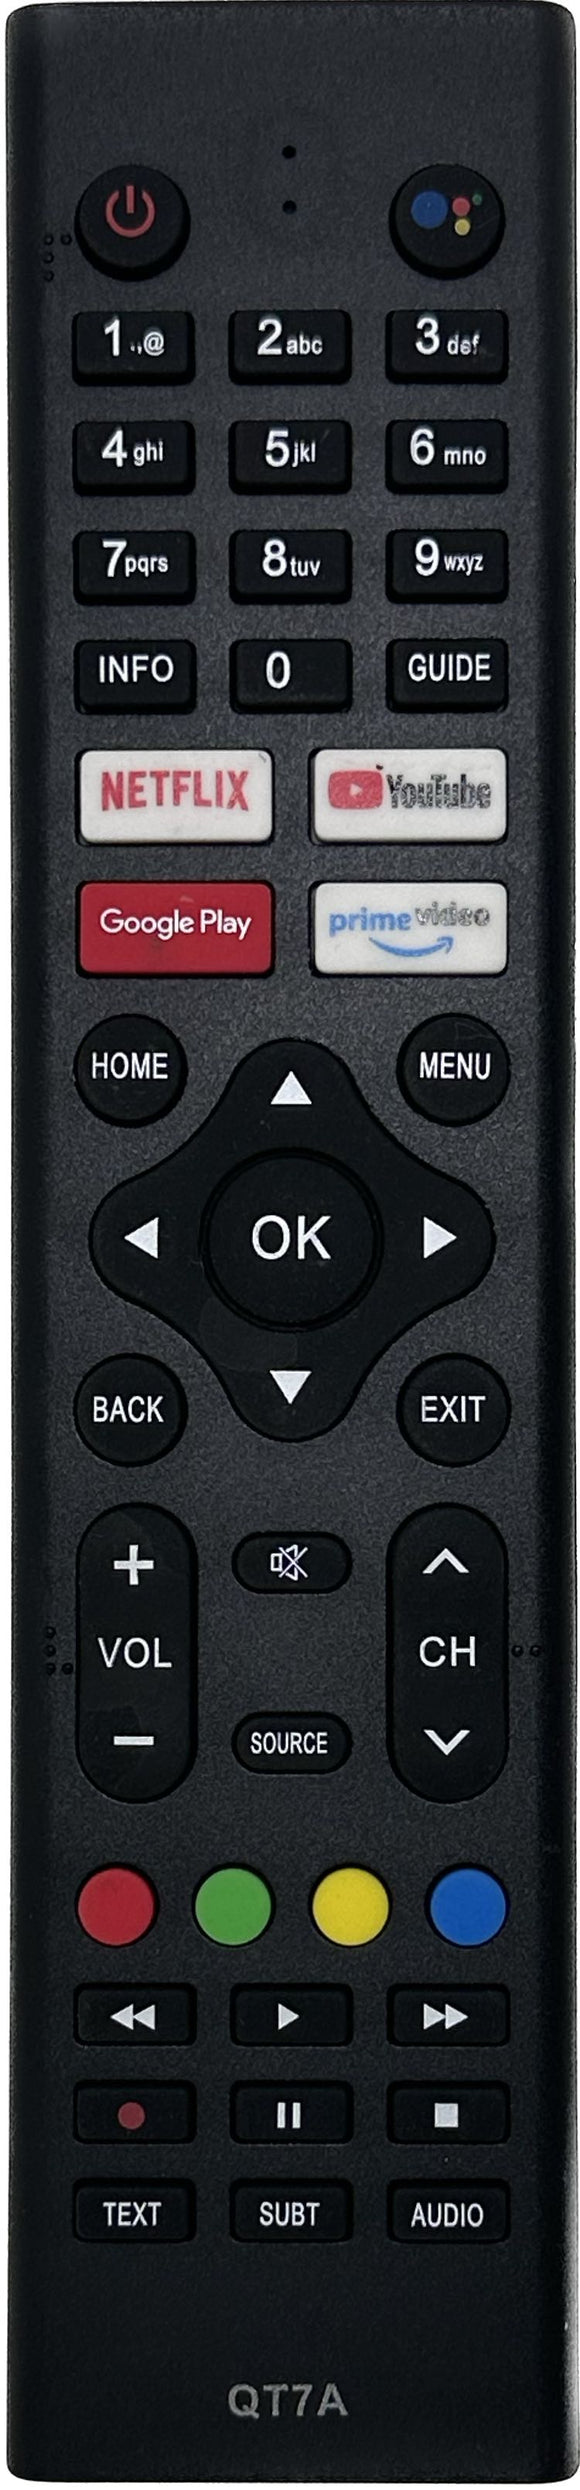 Soniq G43FW60A  Smart Android TV Replacement Remote Control